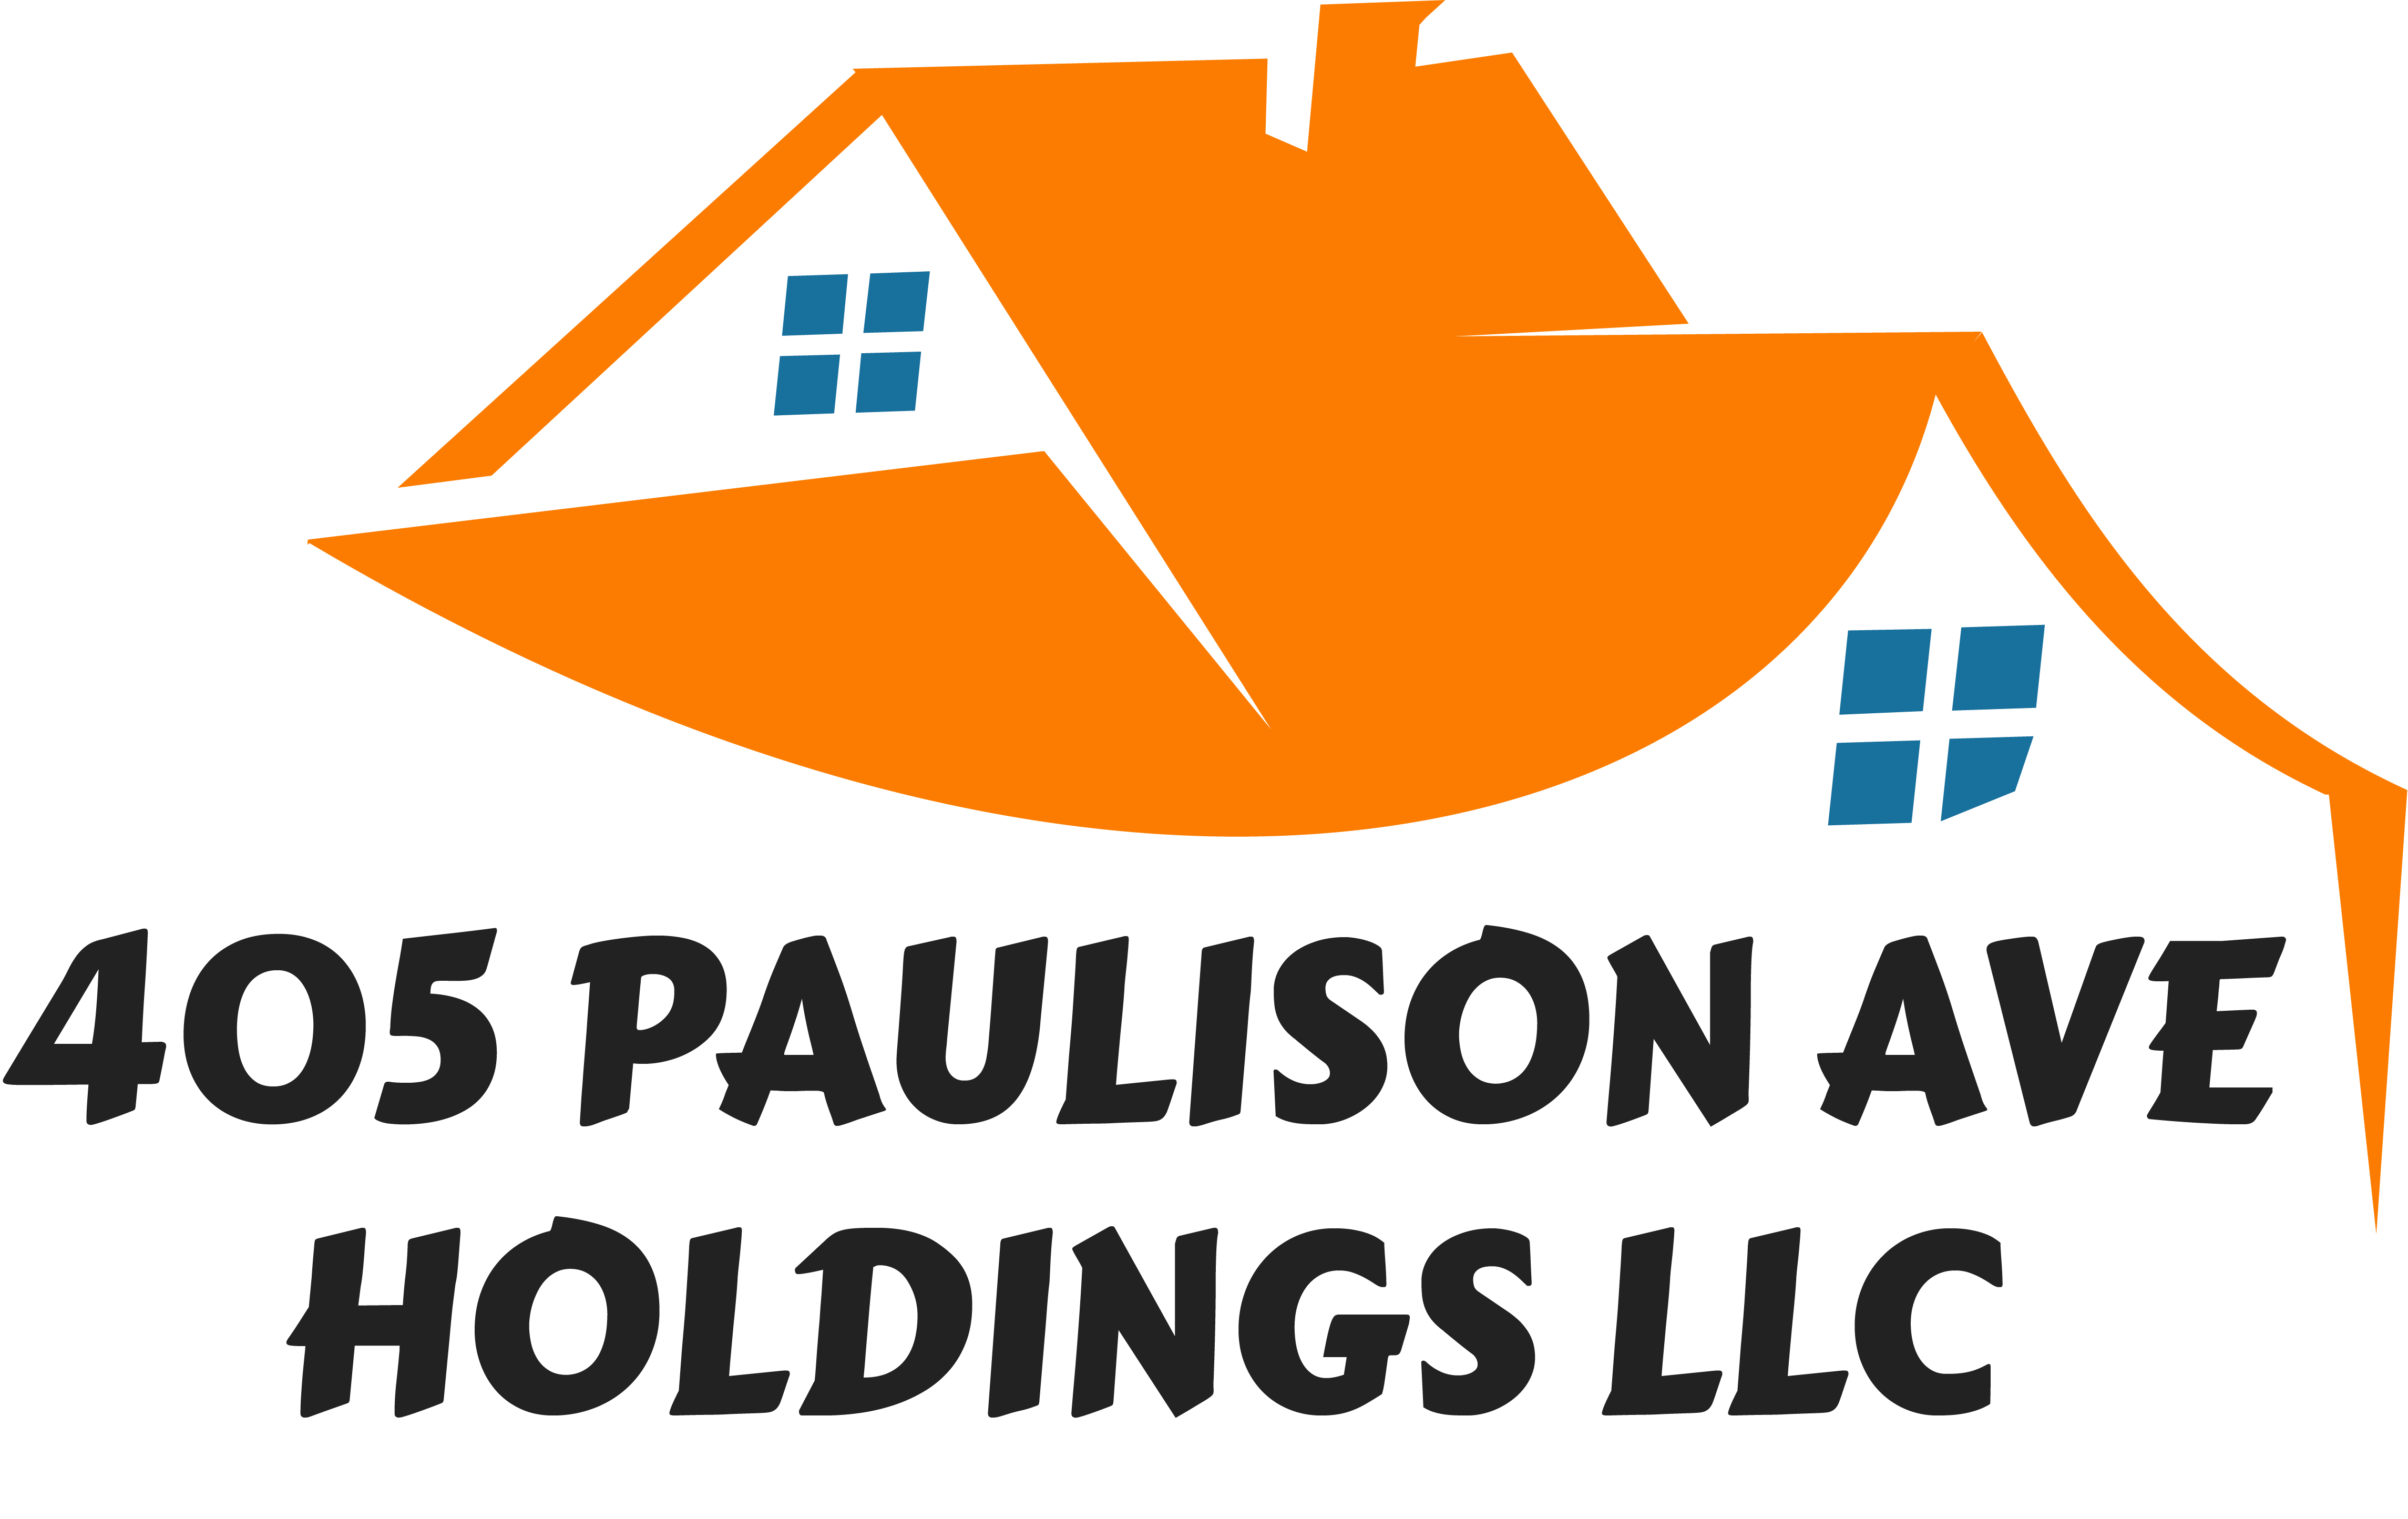 405 PAULISON AVE HOLDINGS LLC